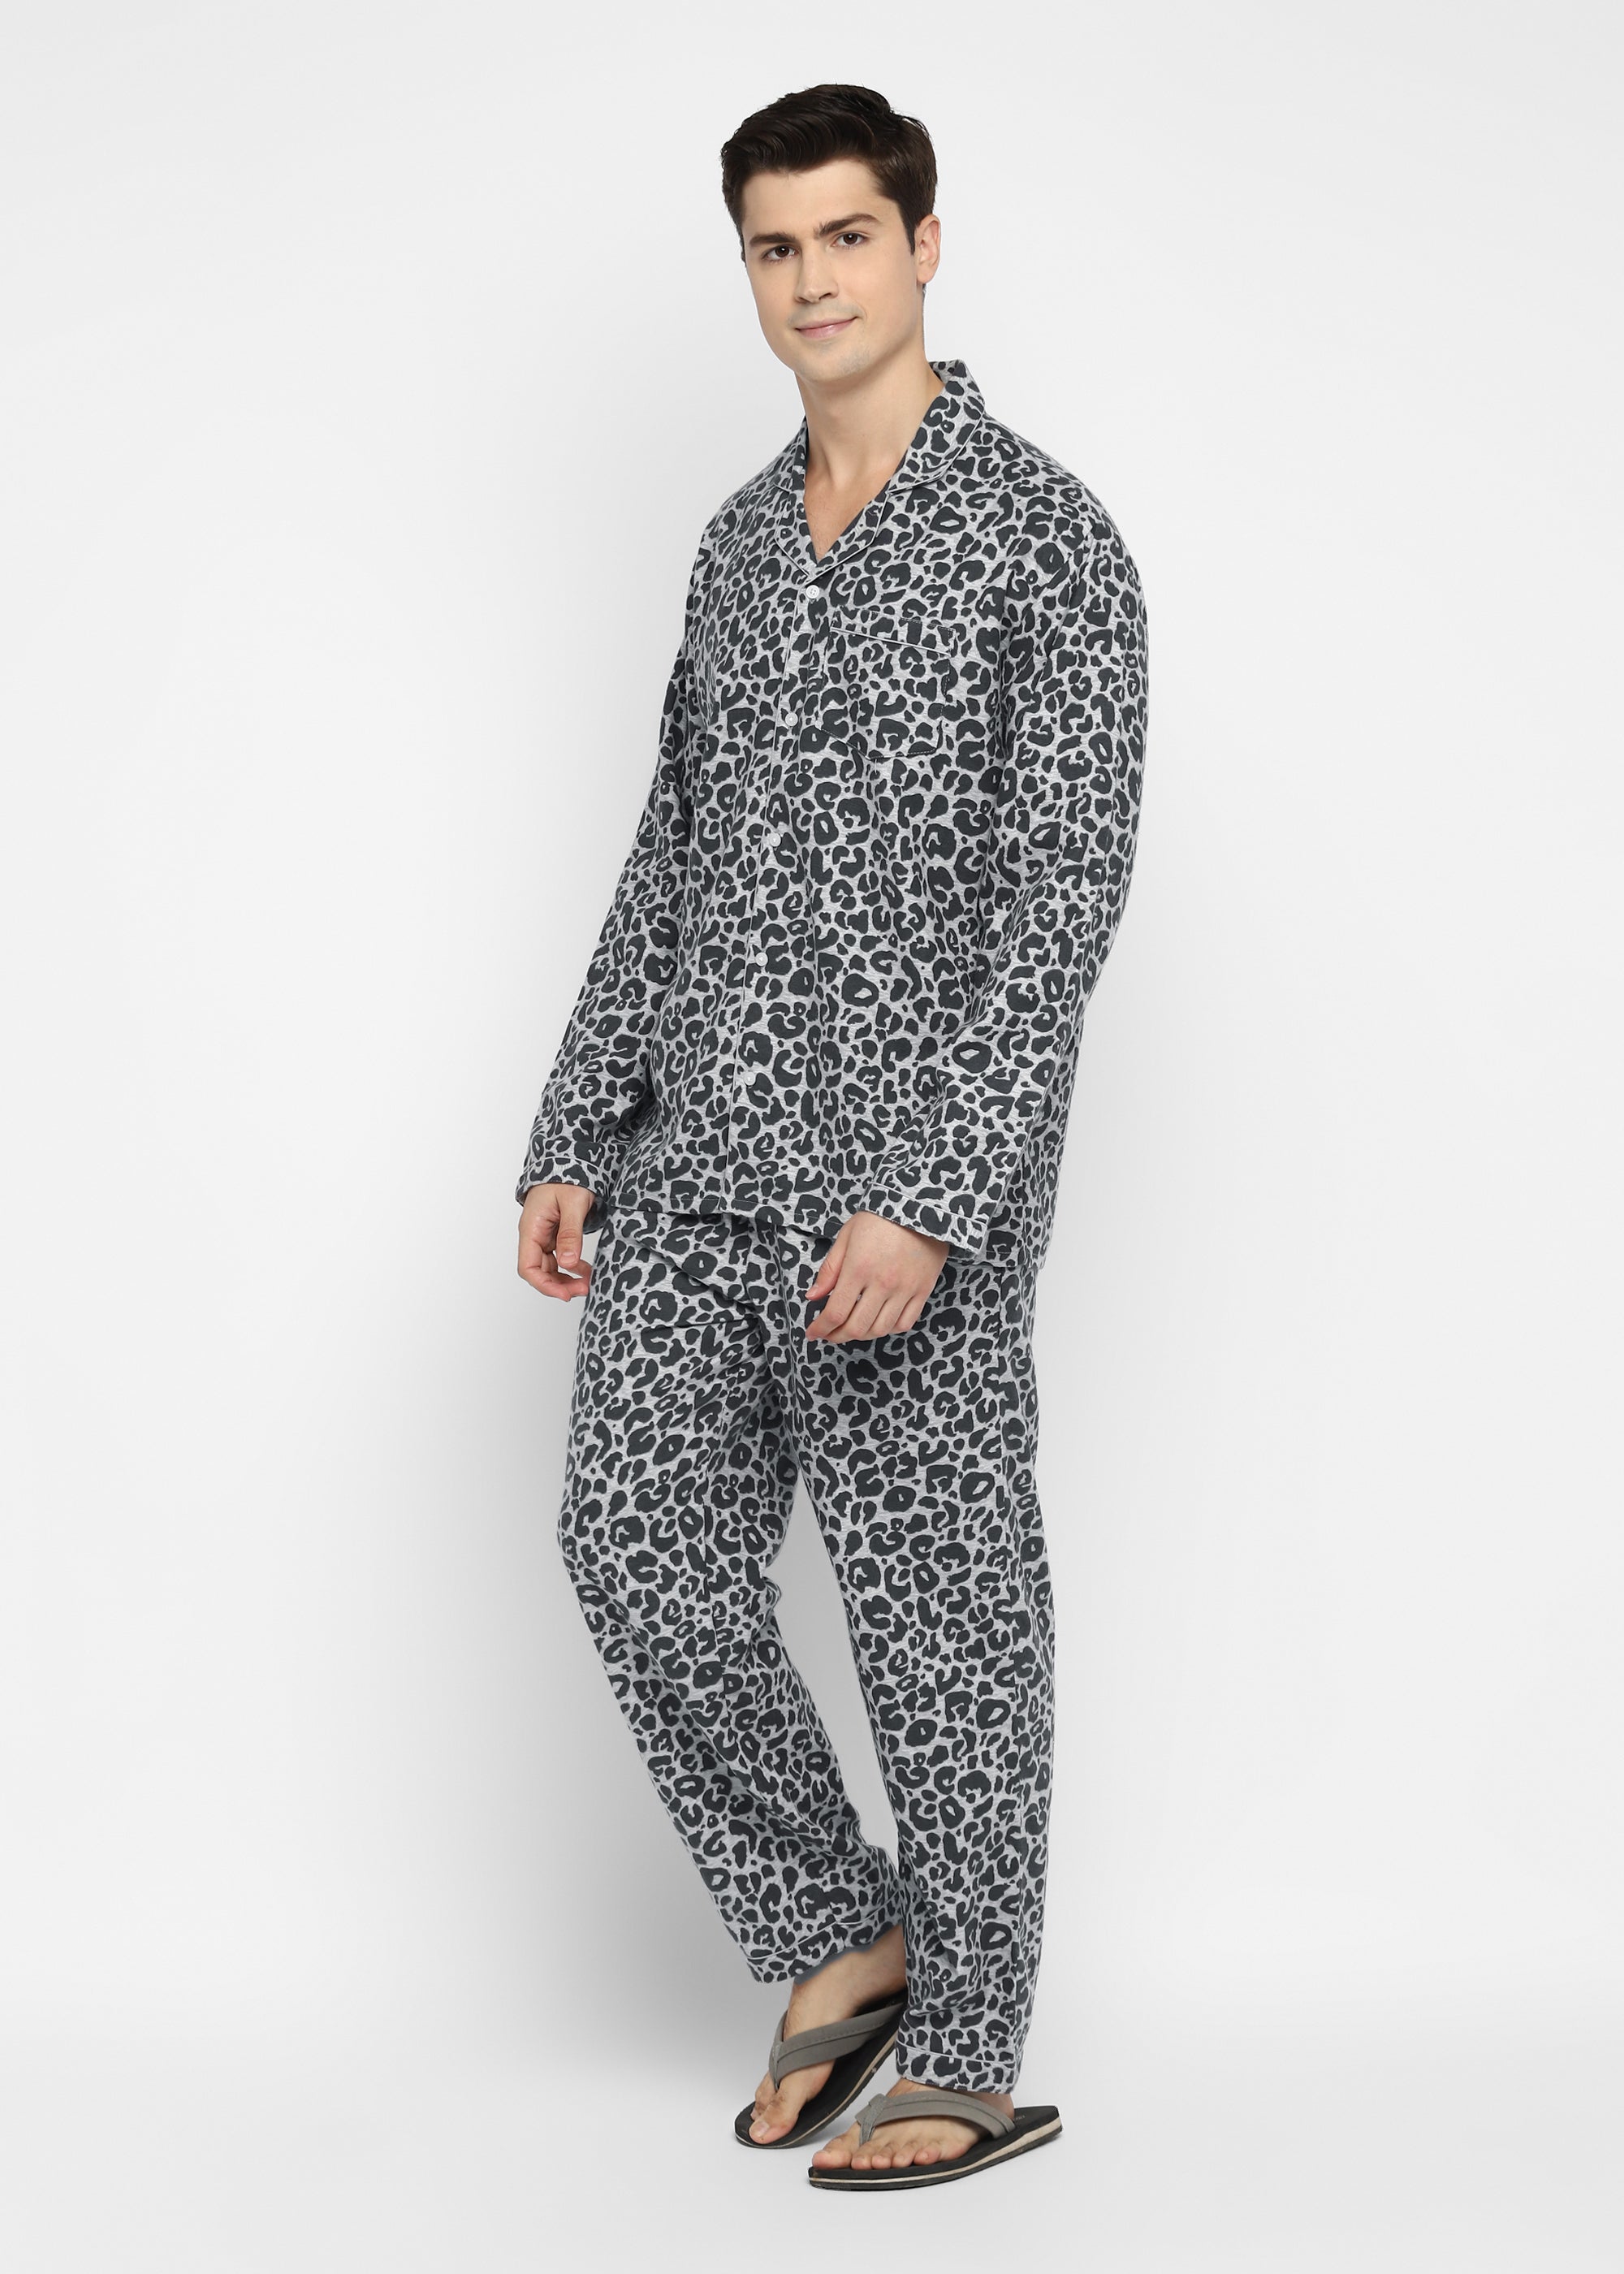 Grey Animal Print Cotton Flannel Long Sleeve Men's Night Suit - Shopbloom